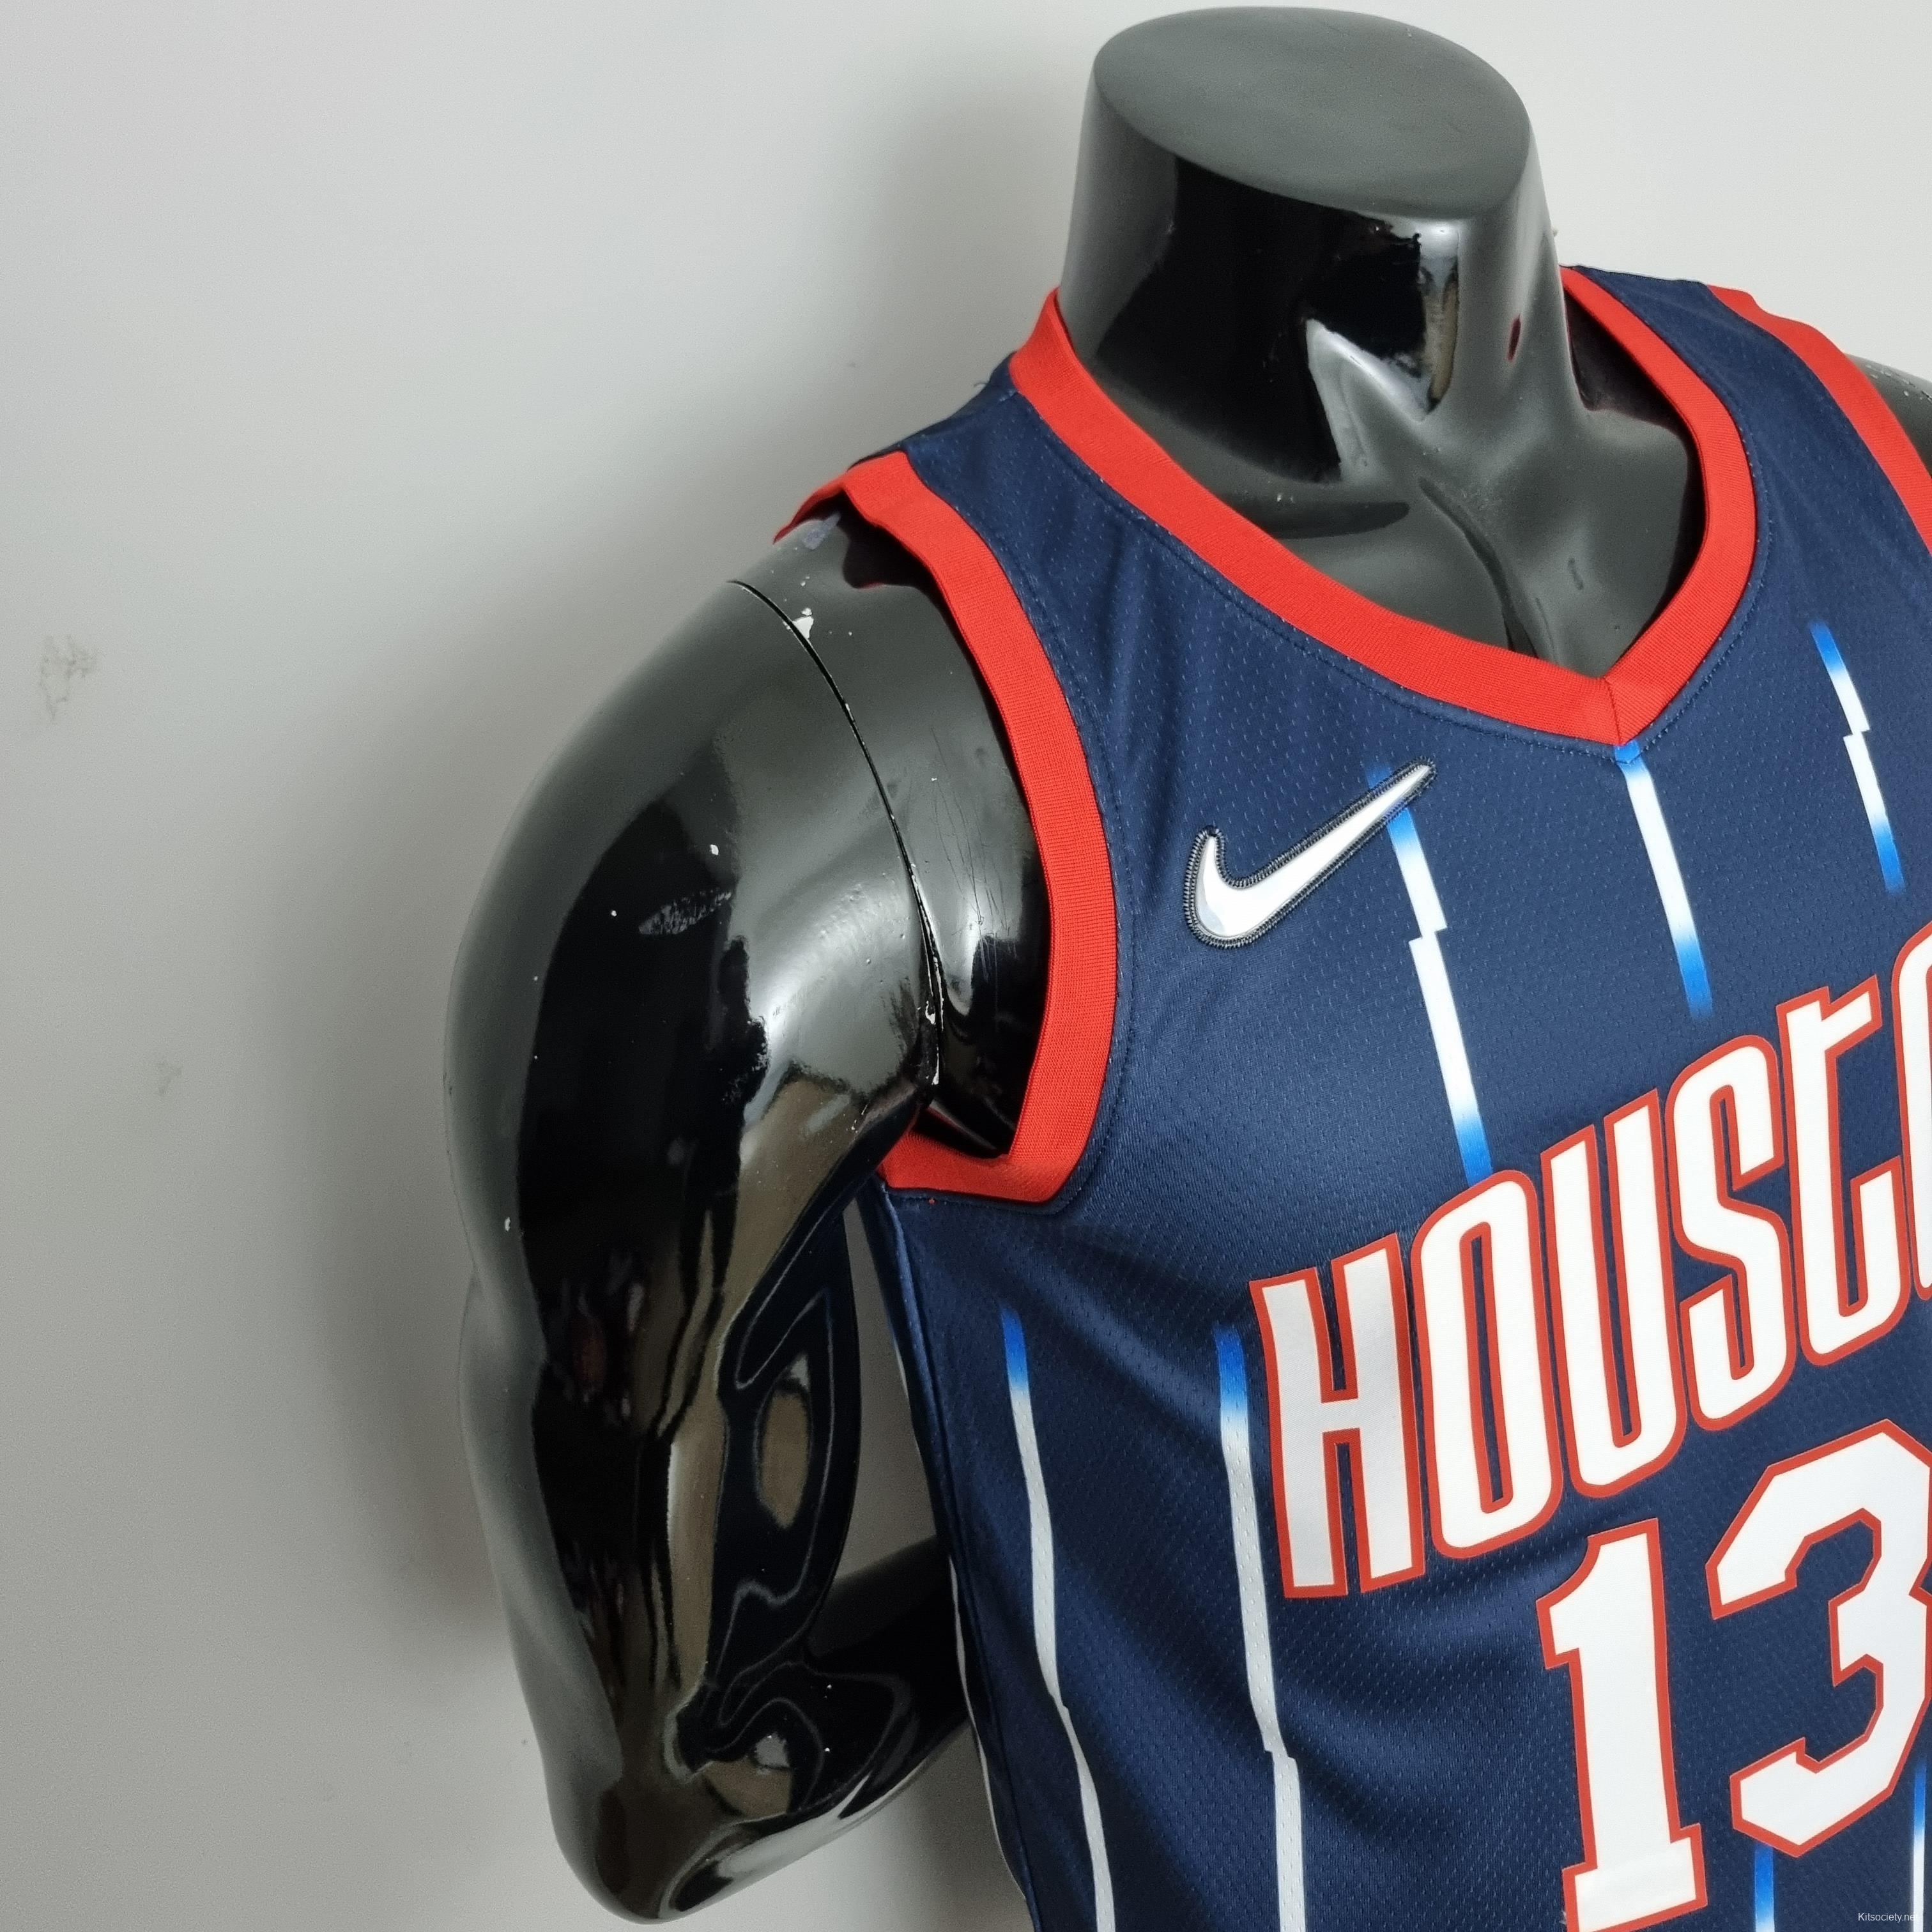 2021 City Edition Houston Rockets Blue #13 NBA Jersey,Houston Rockets